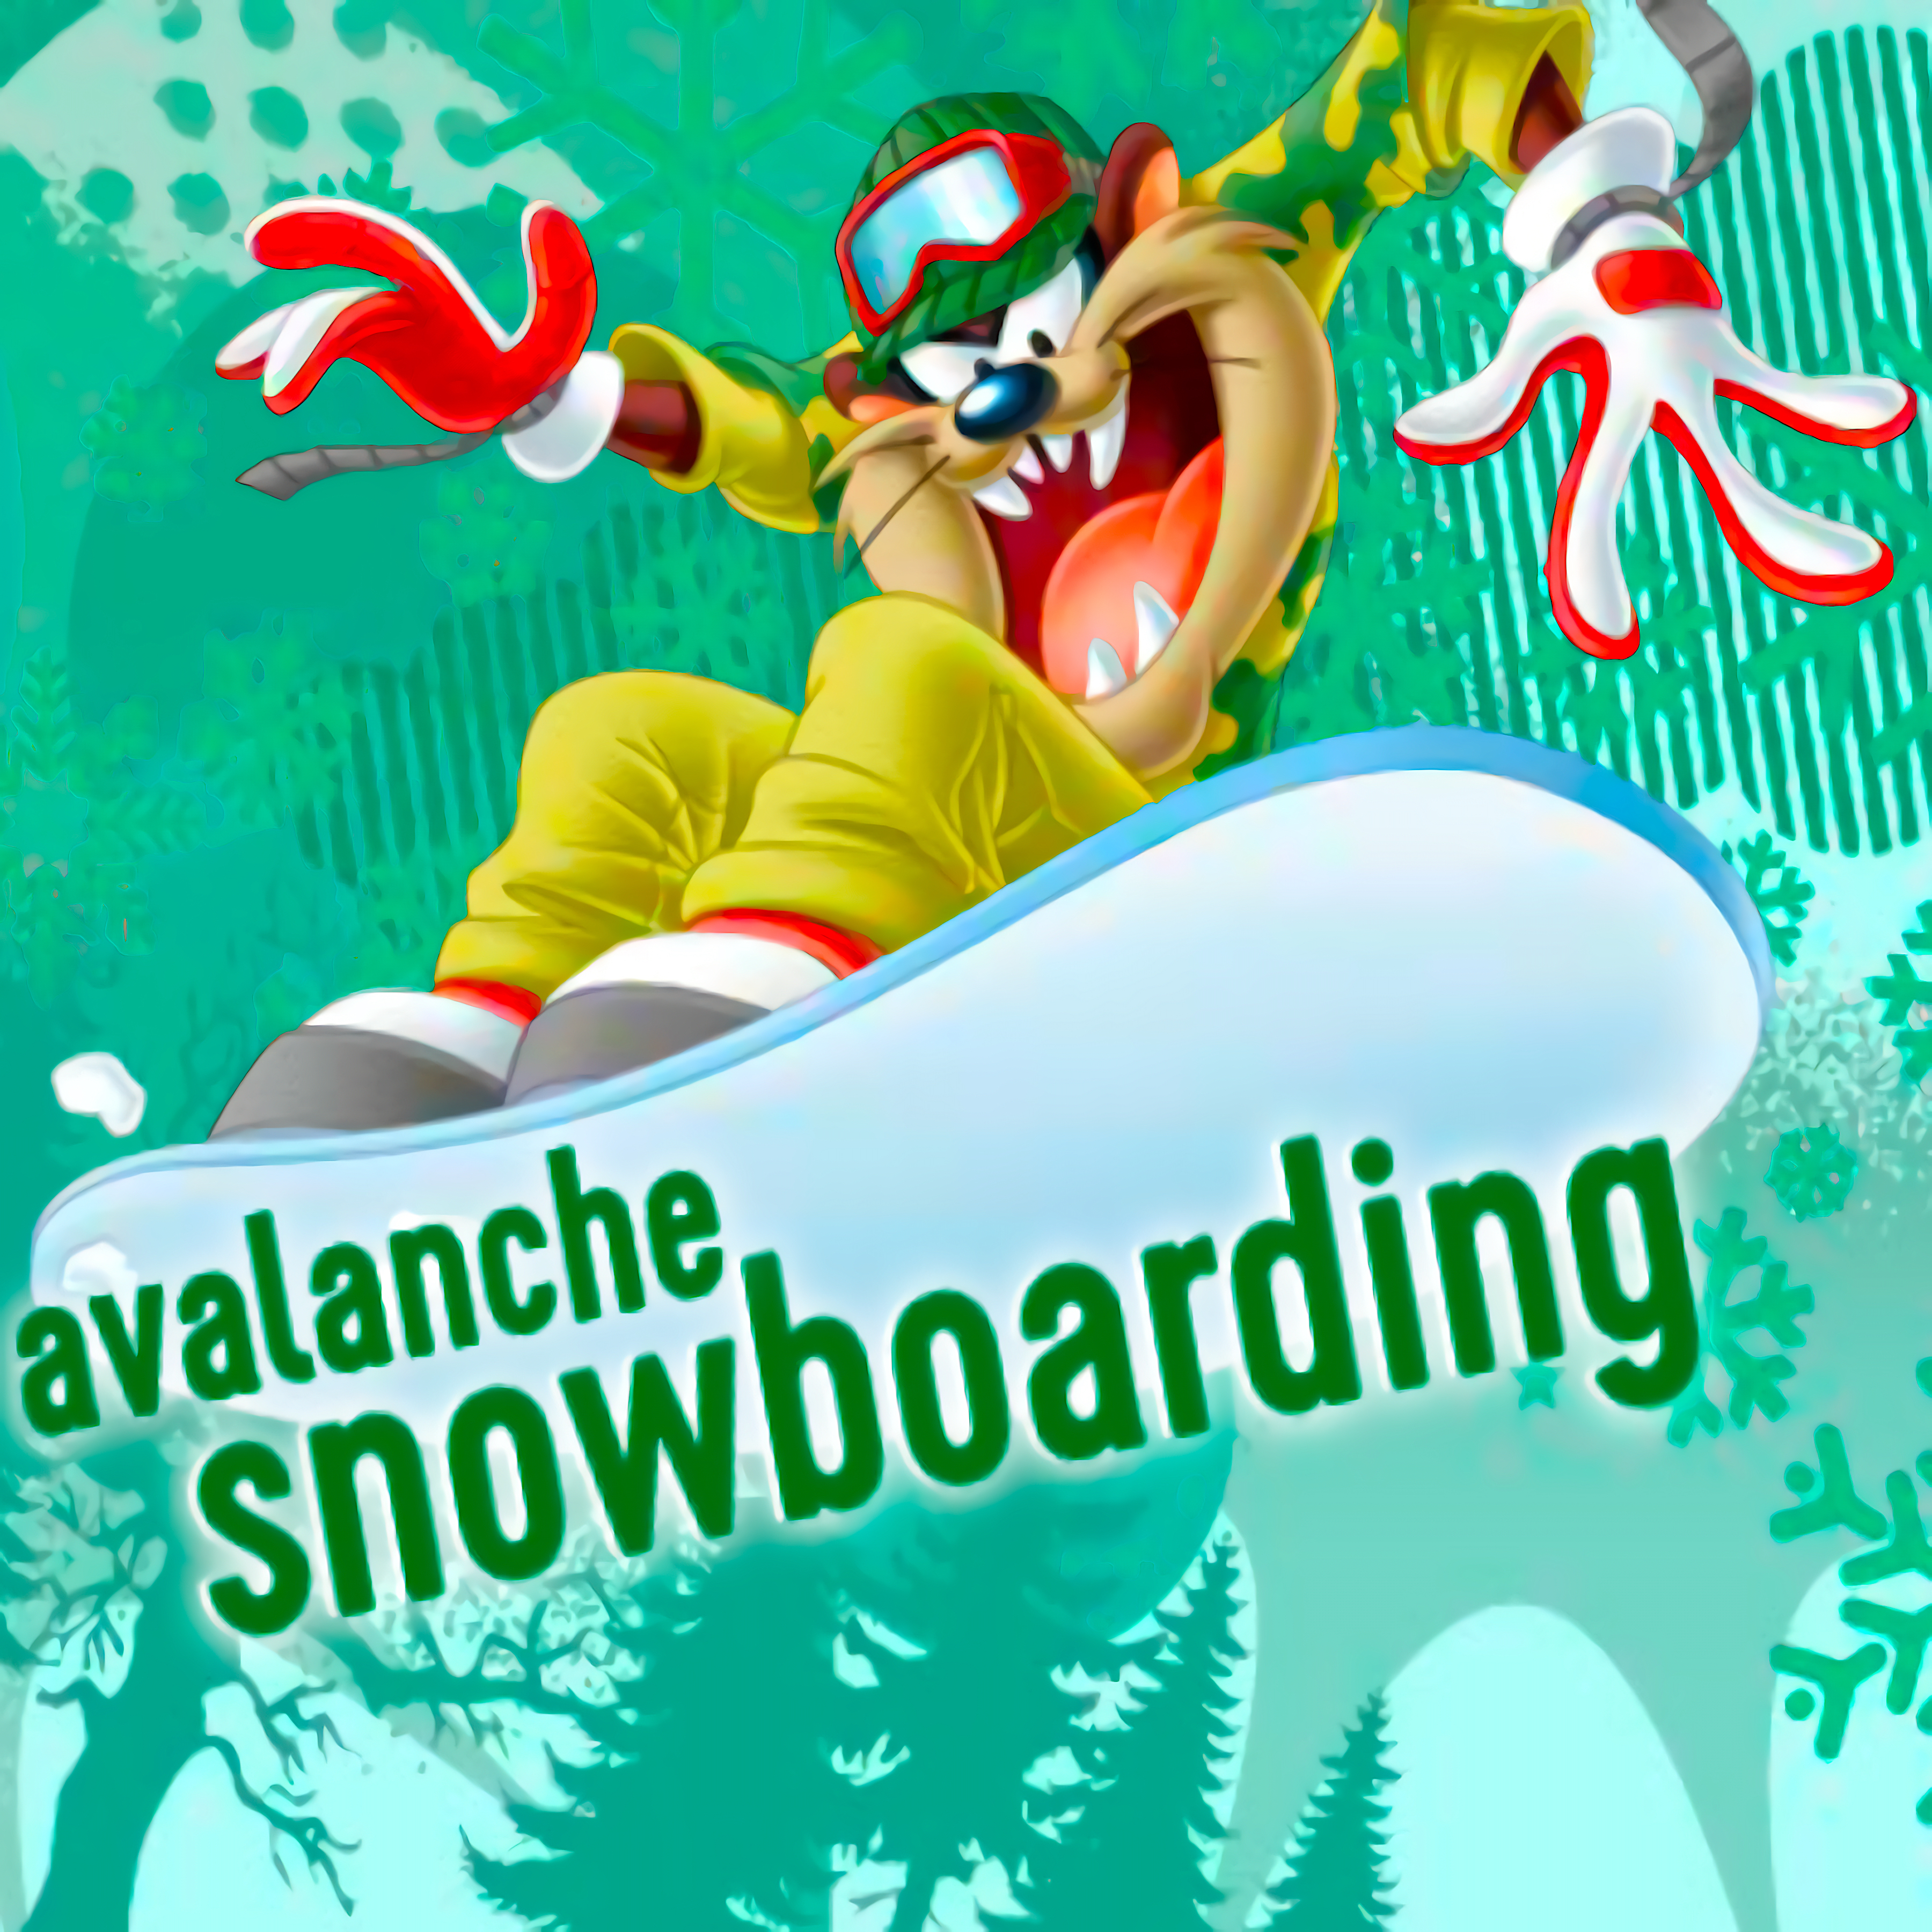 Snowboarding Games - Play Online Games on Desura